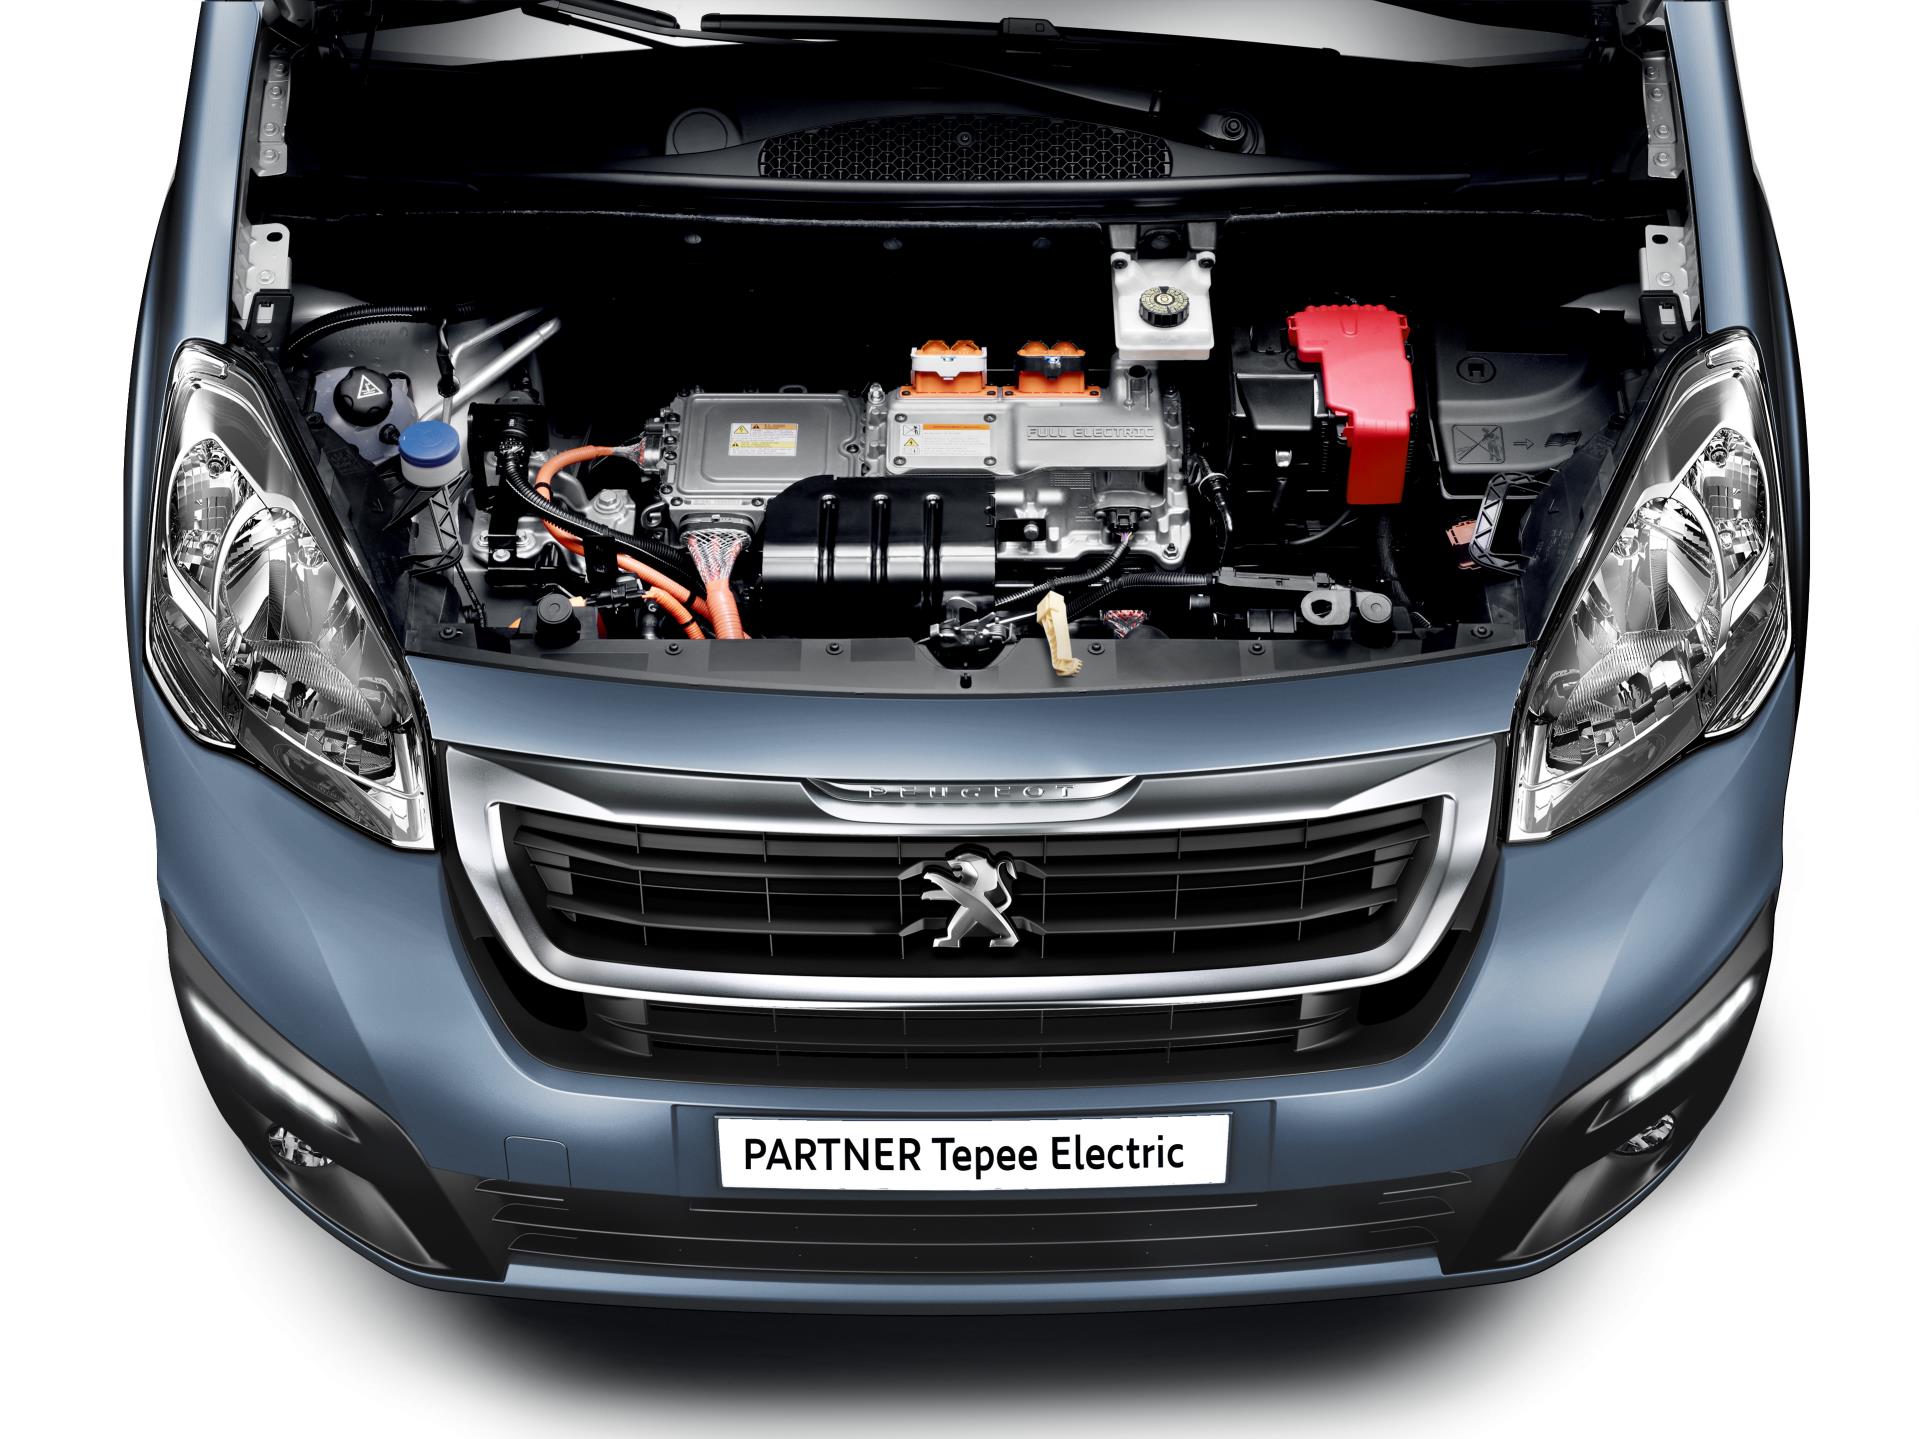 2017 Peugeot Partner Tepee Electric